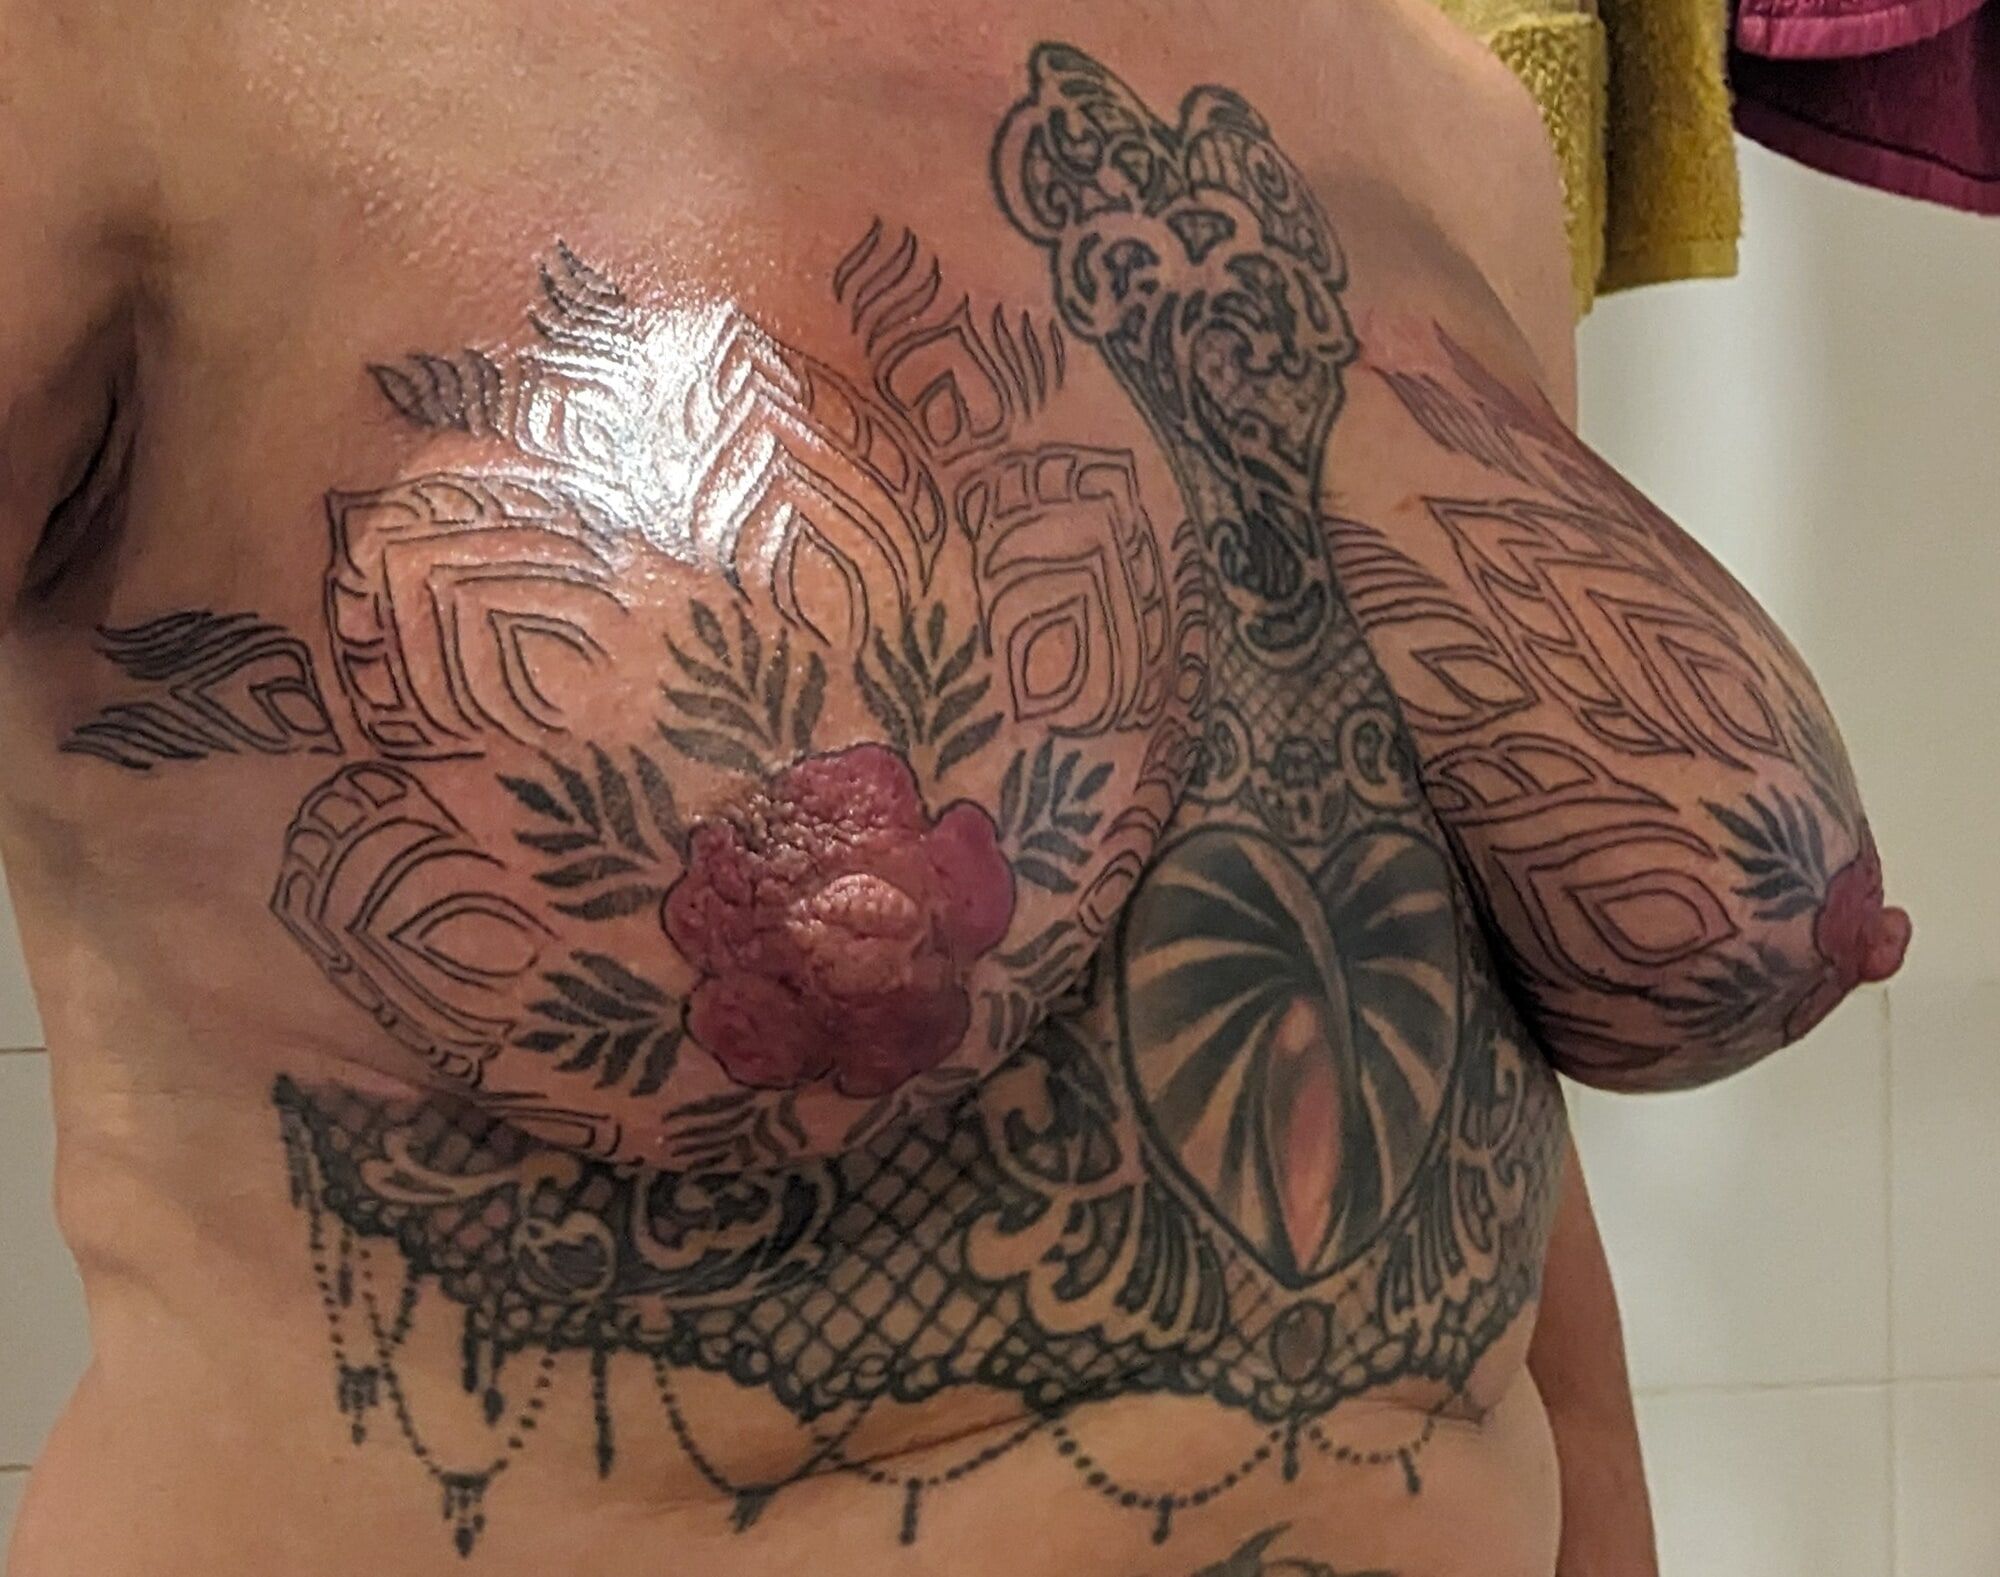 New boob tattoos session 2 #2